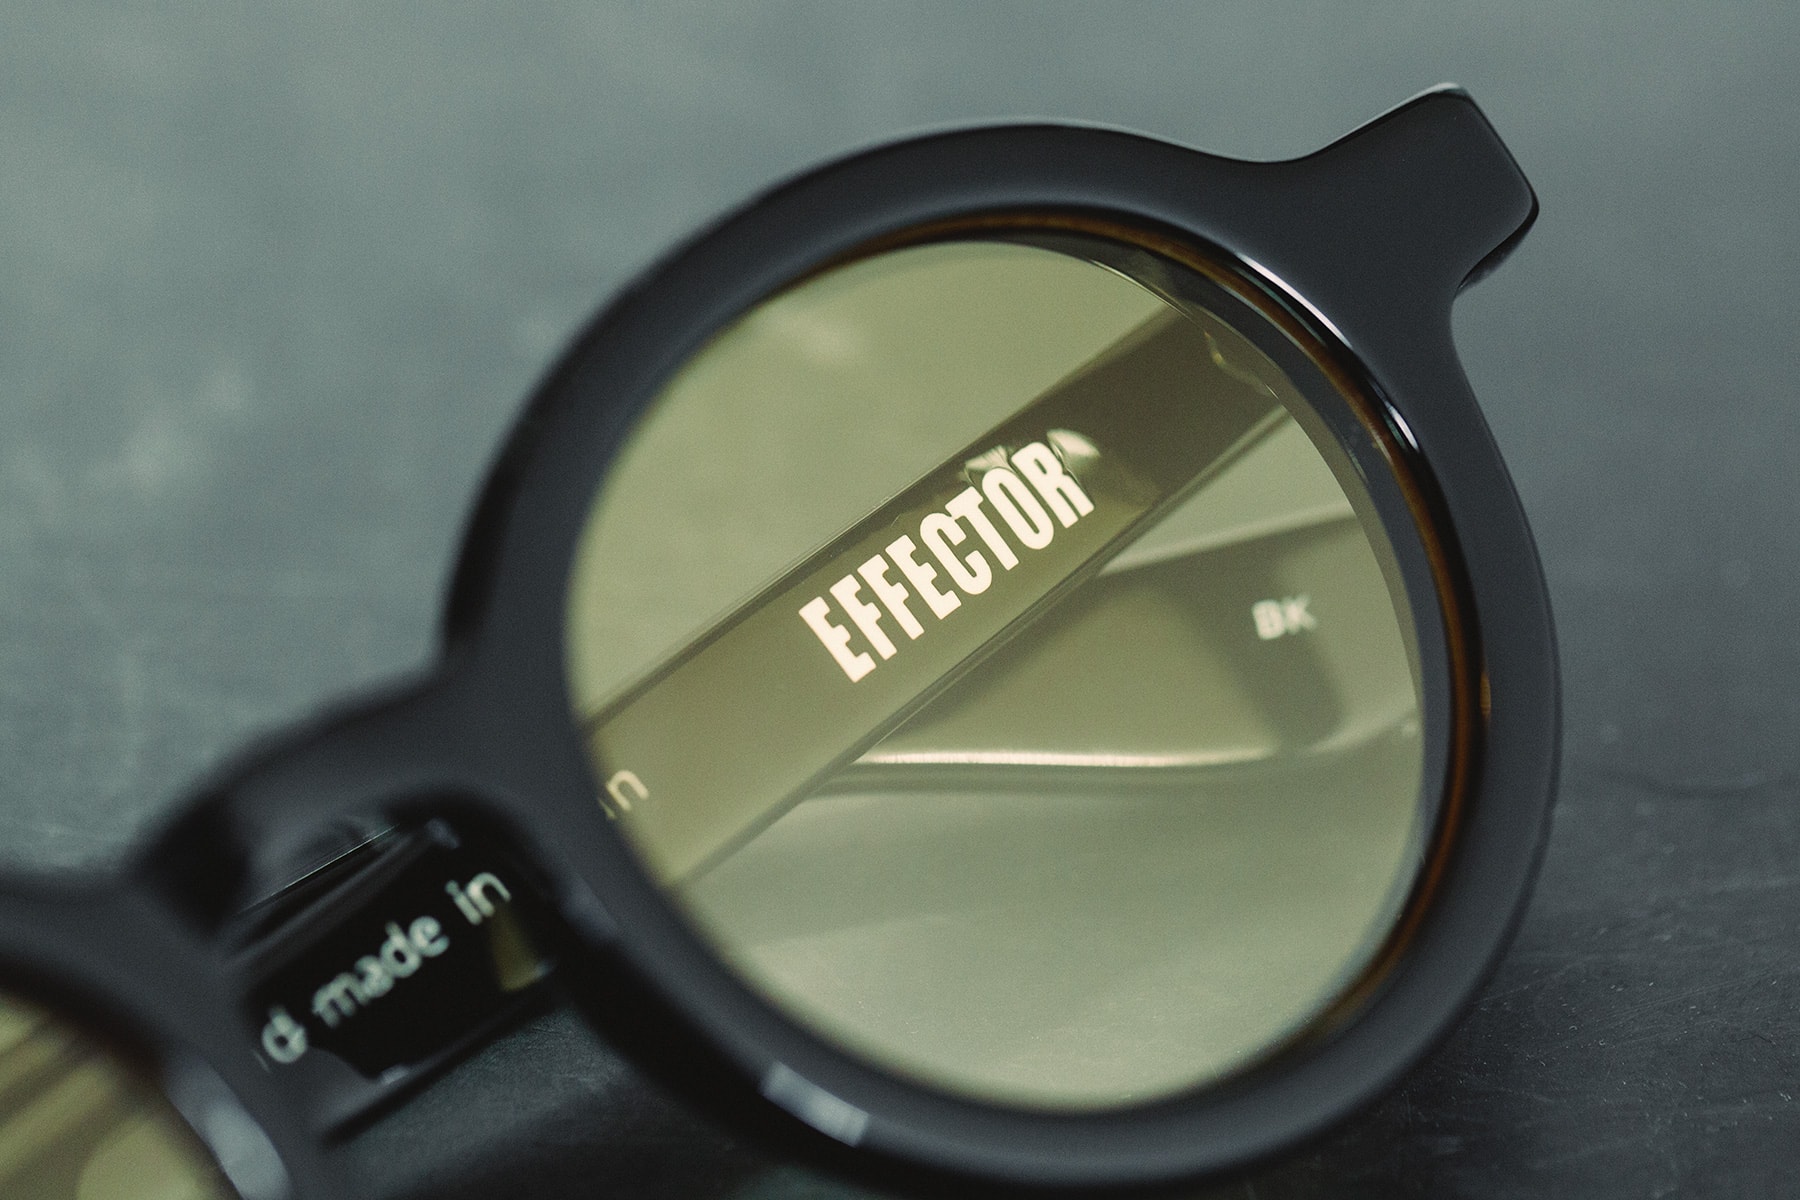 EFFECTOR x BOSS 40 周年紀念眼鏡新作